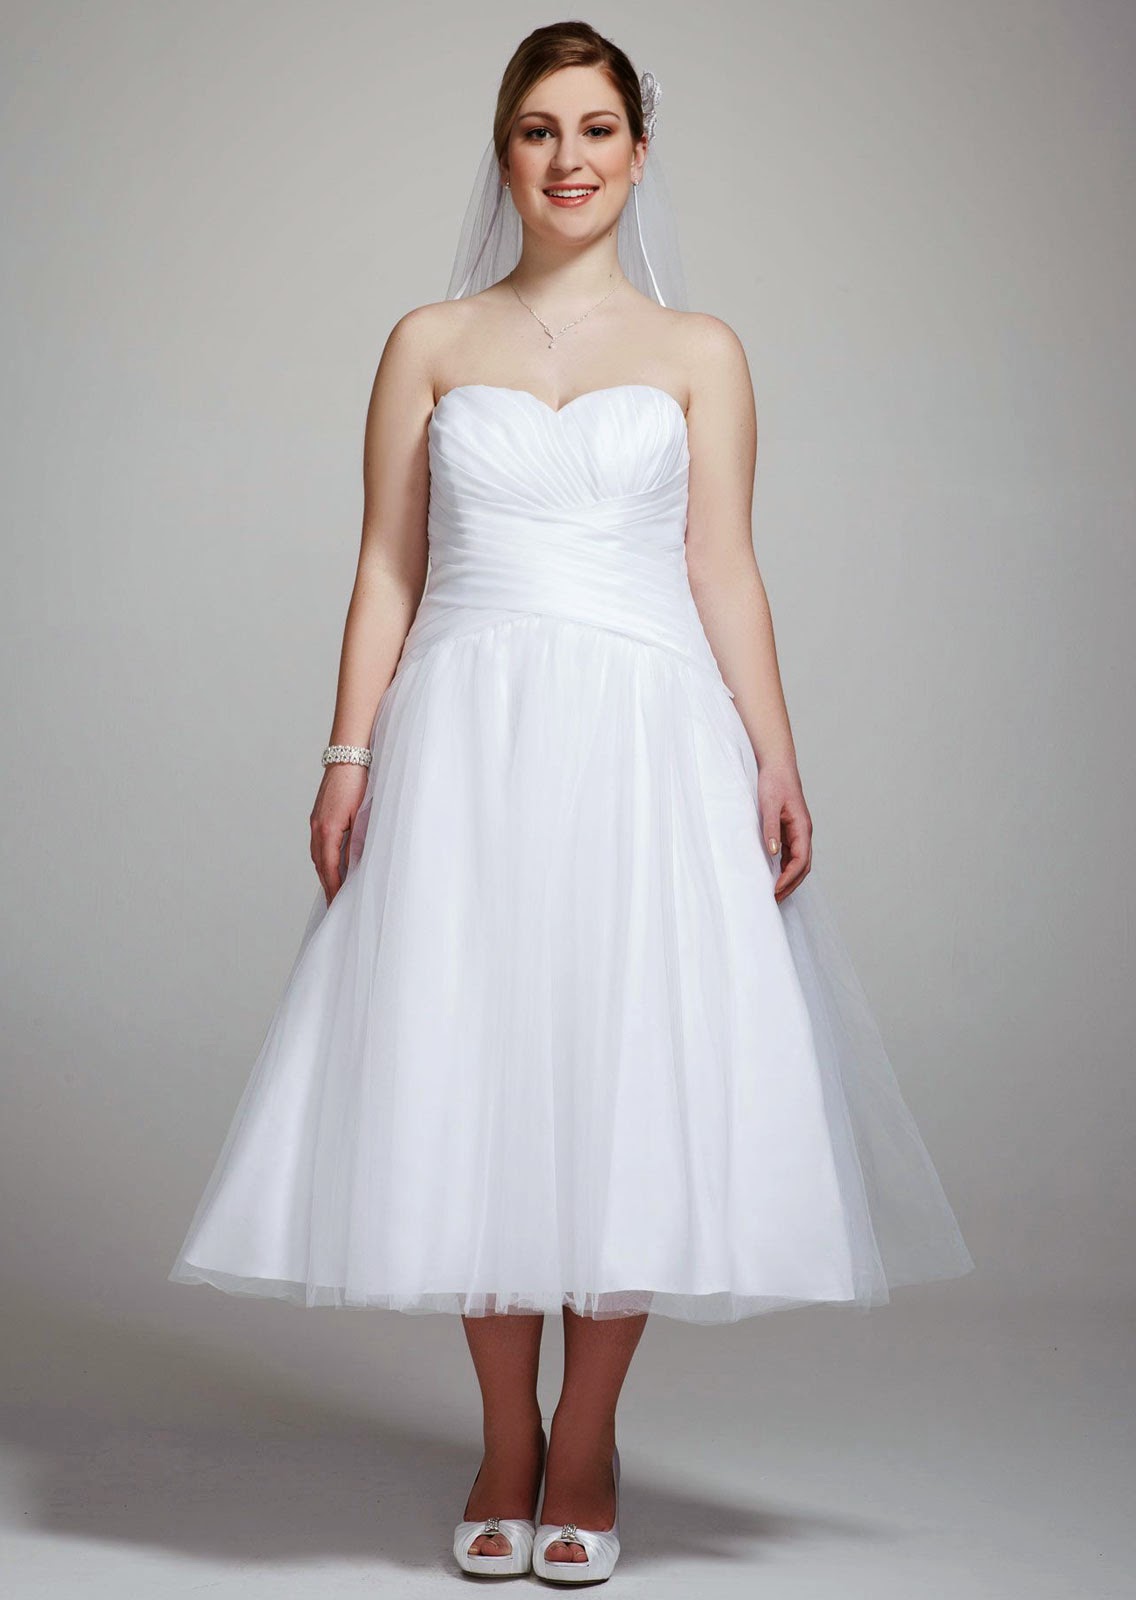 Plus Size Casual Wedding Dresses Ideas Photos